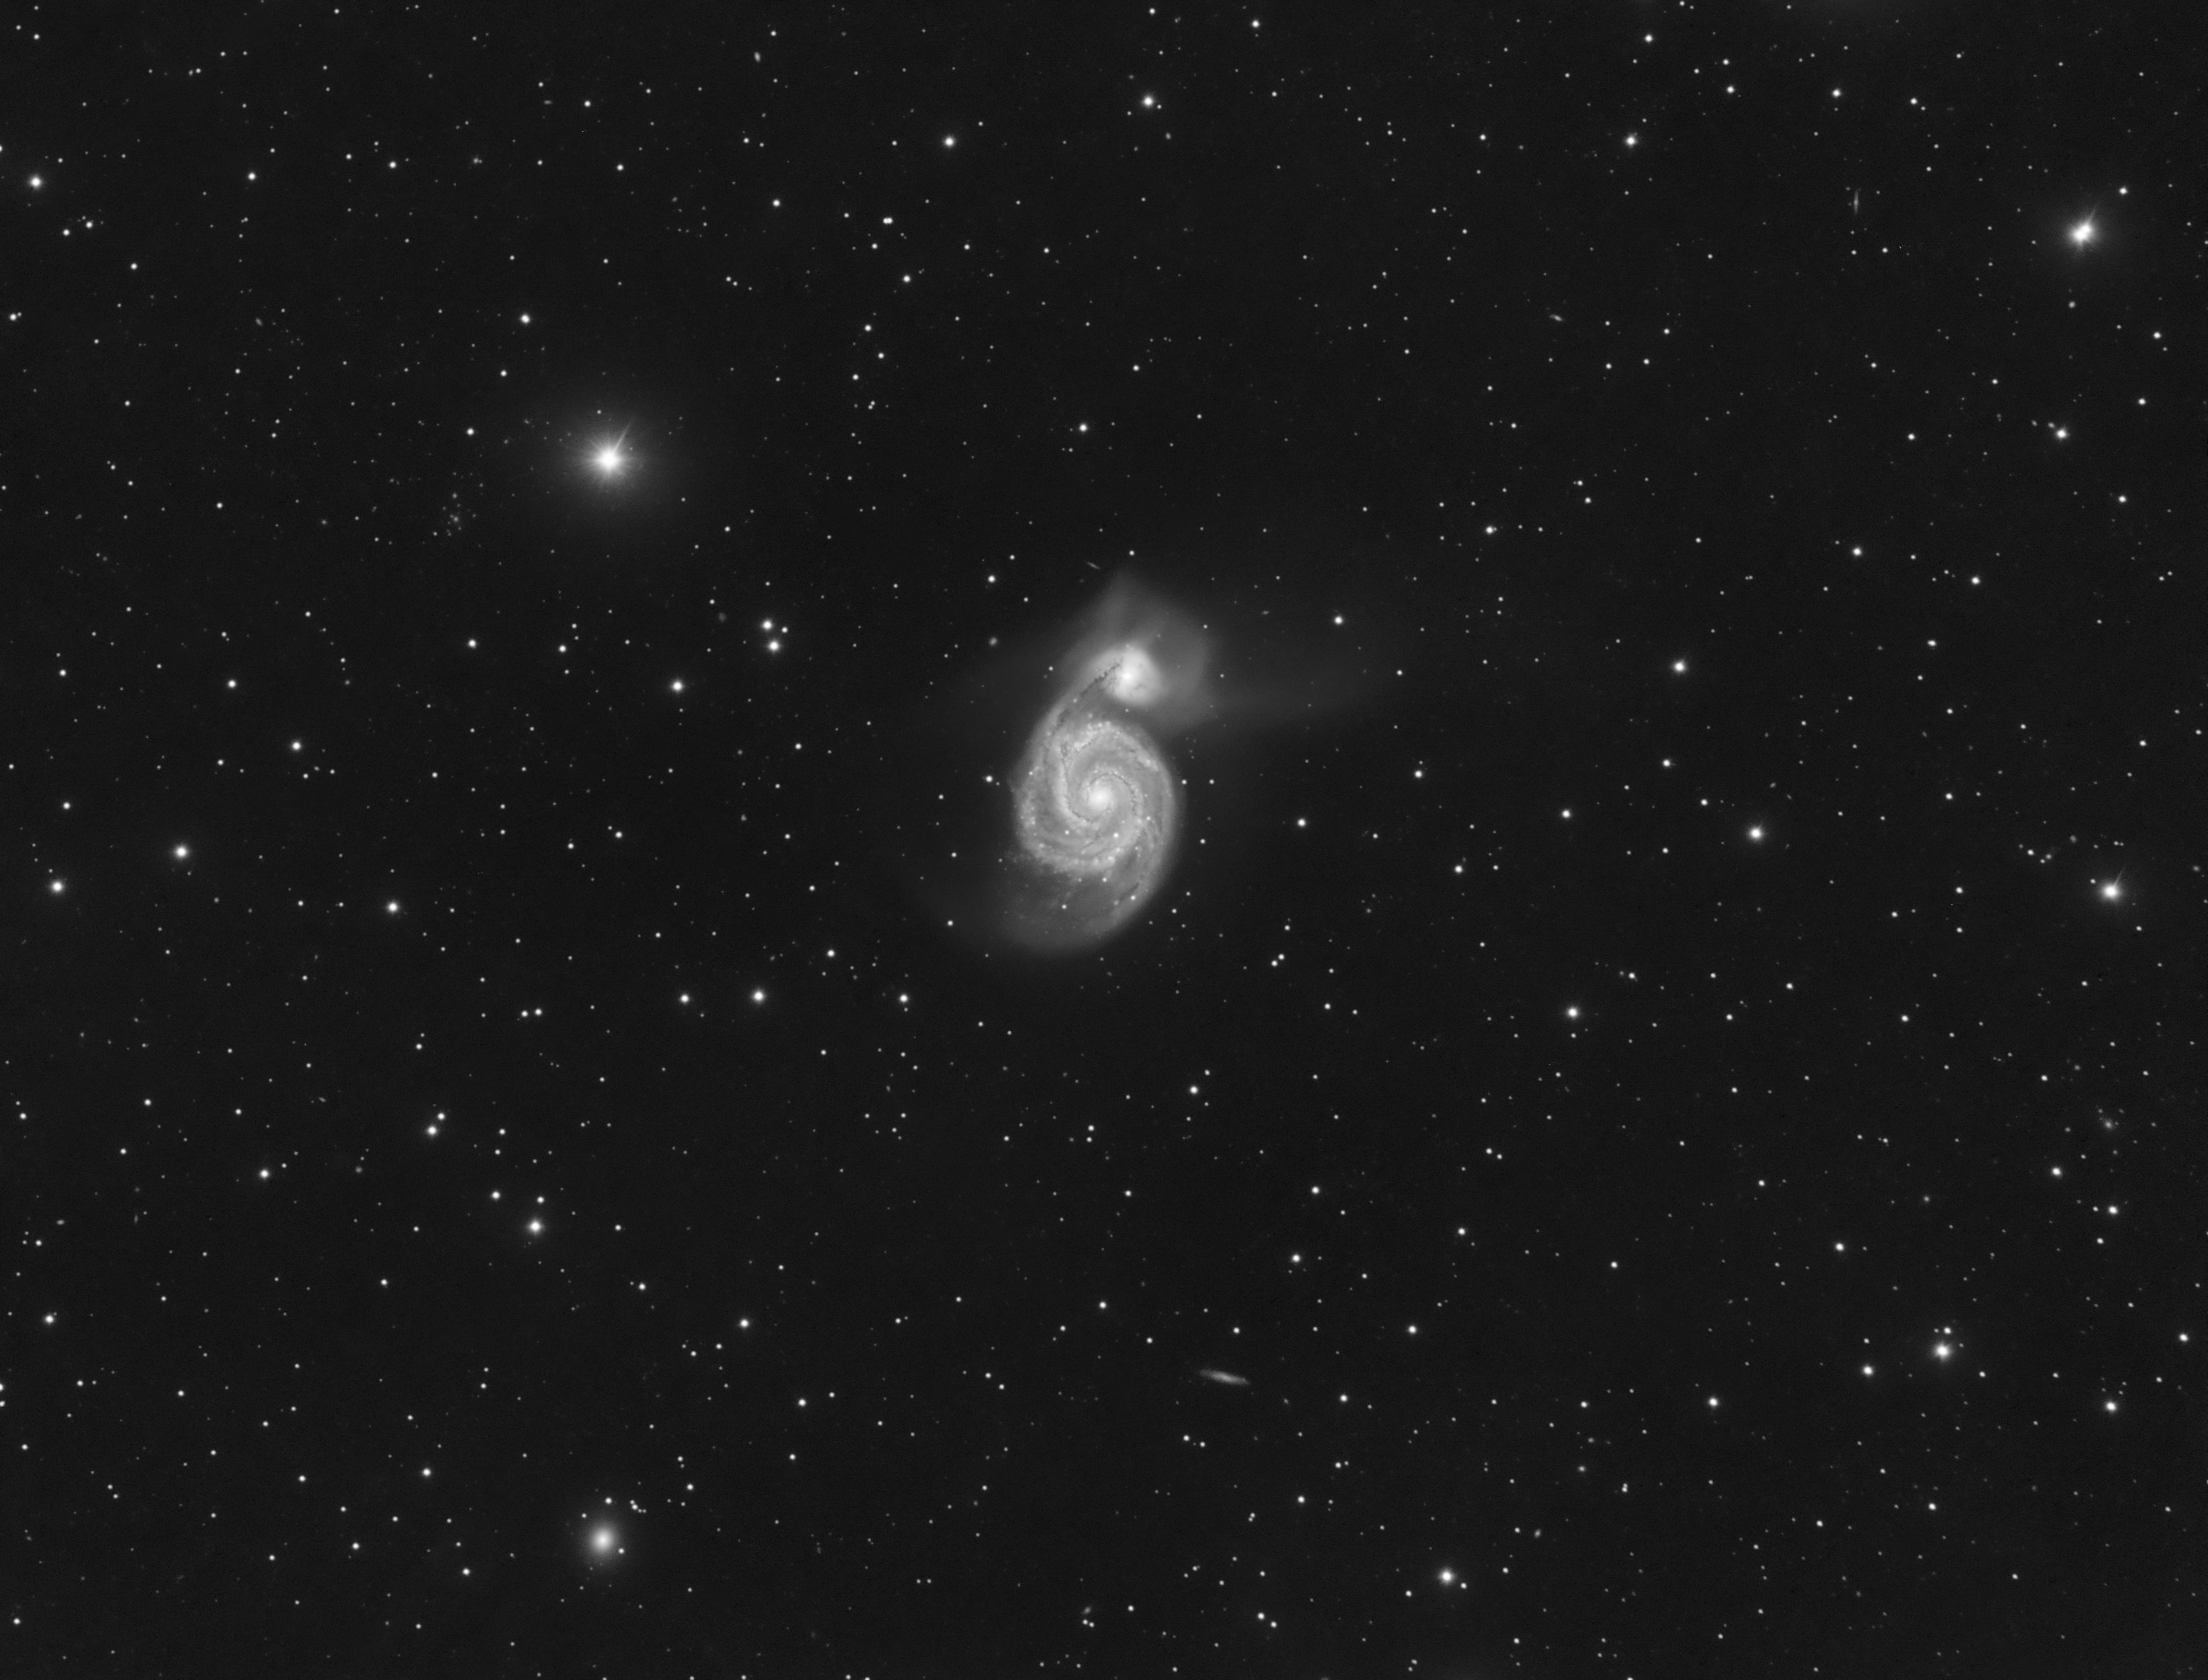 M51 - M51 galaxy